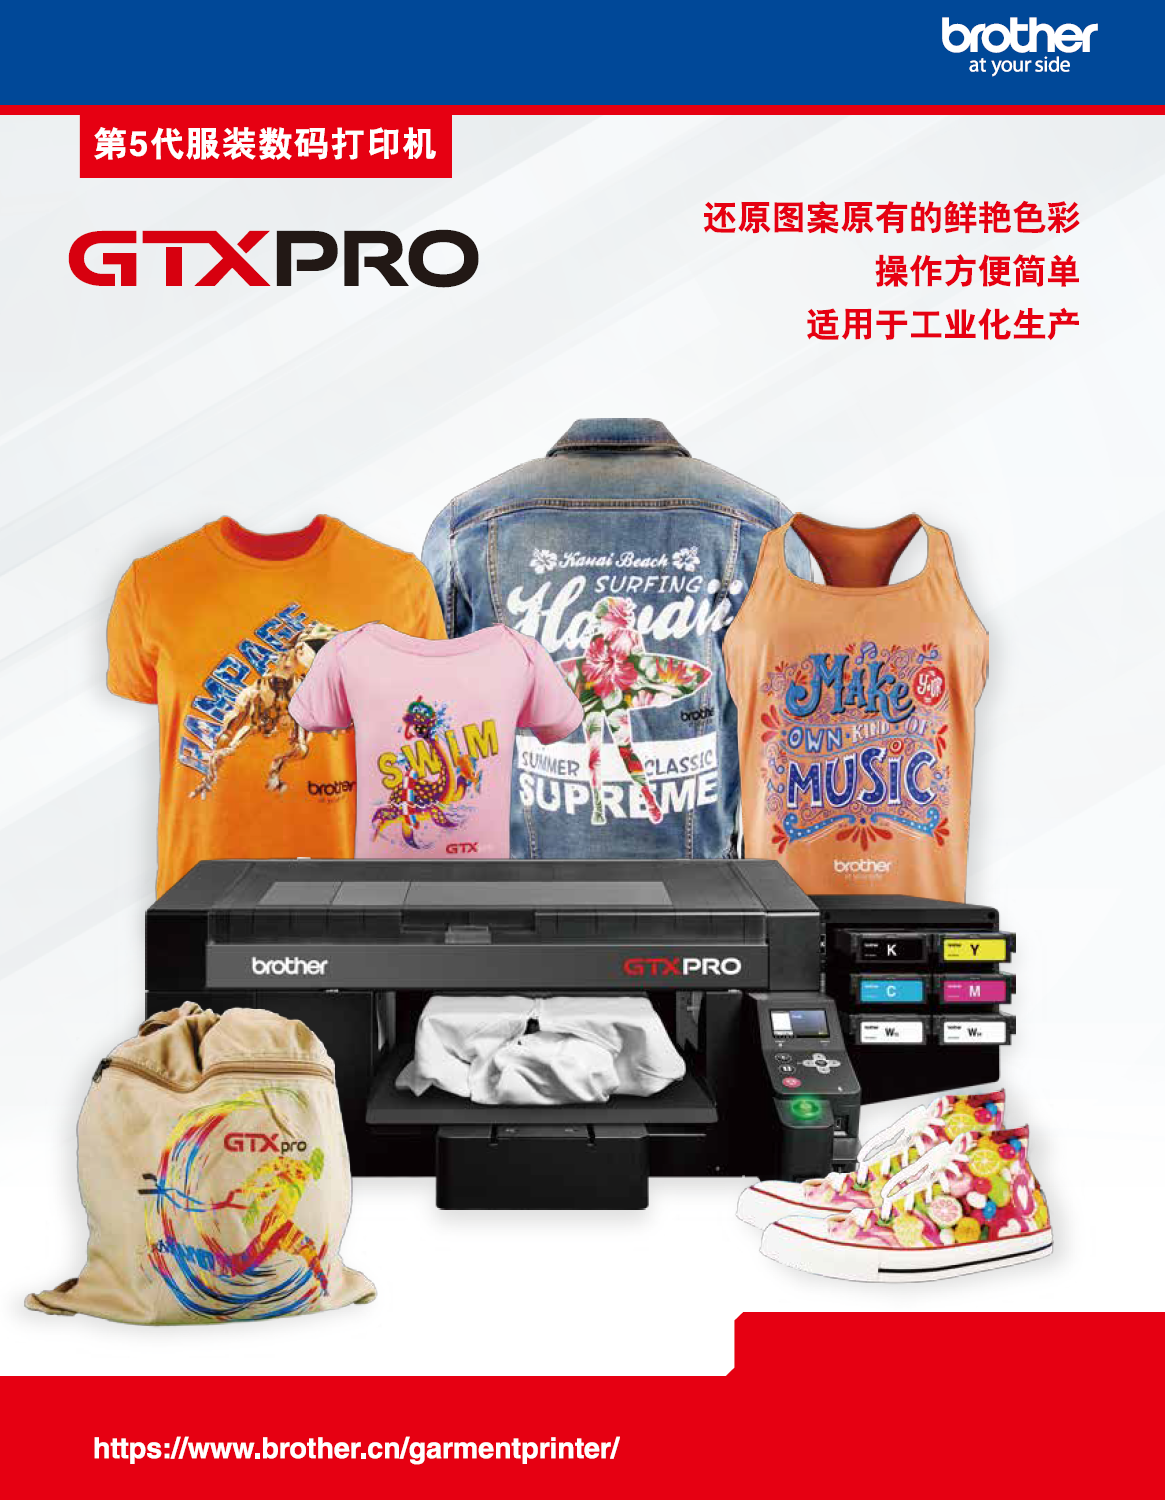 GTXPRO catalog